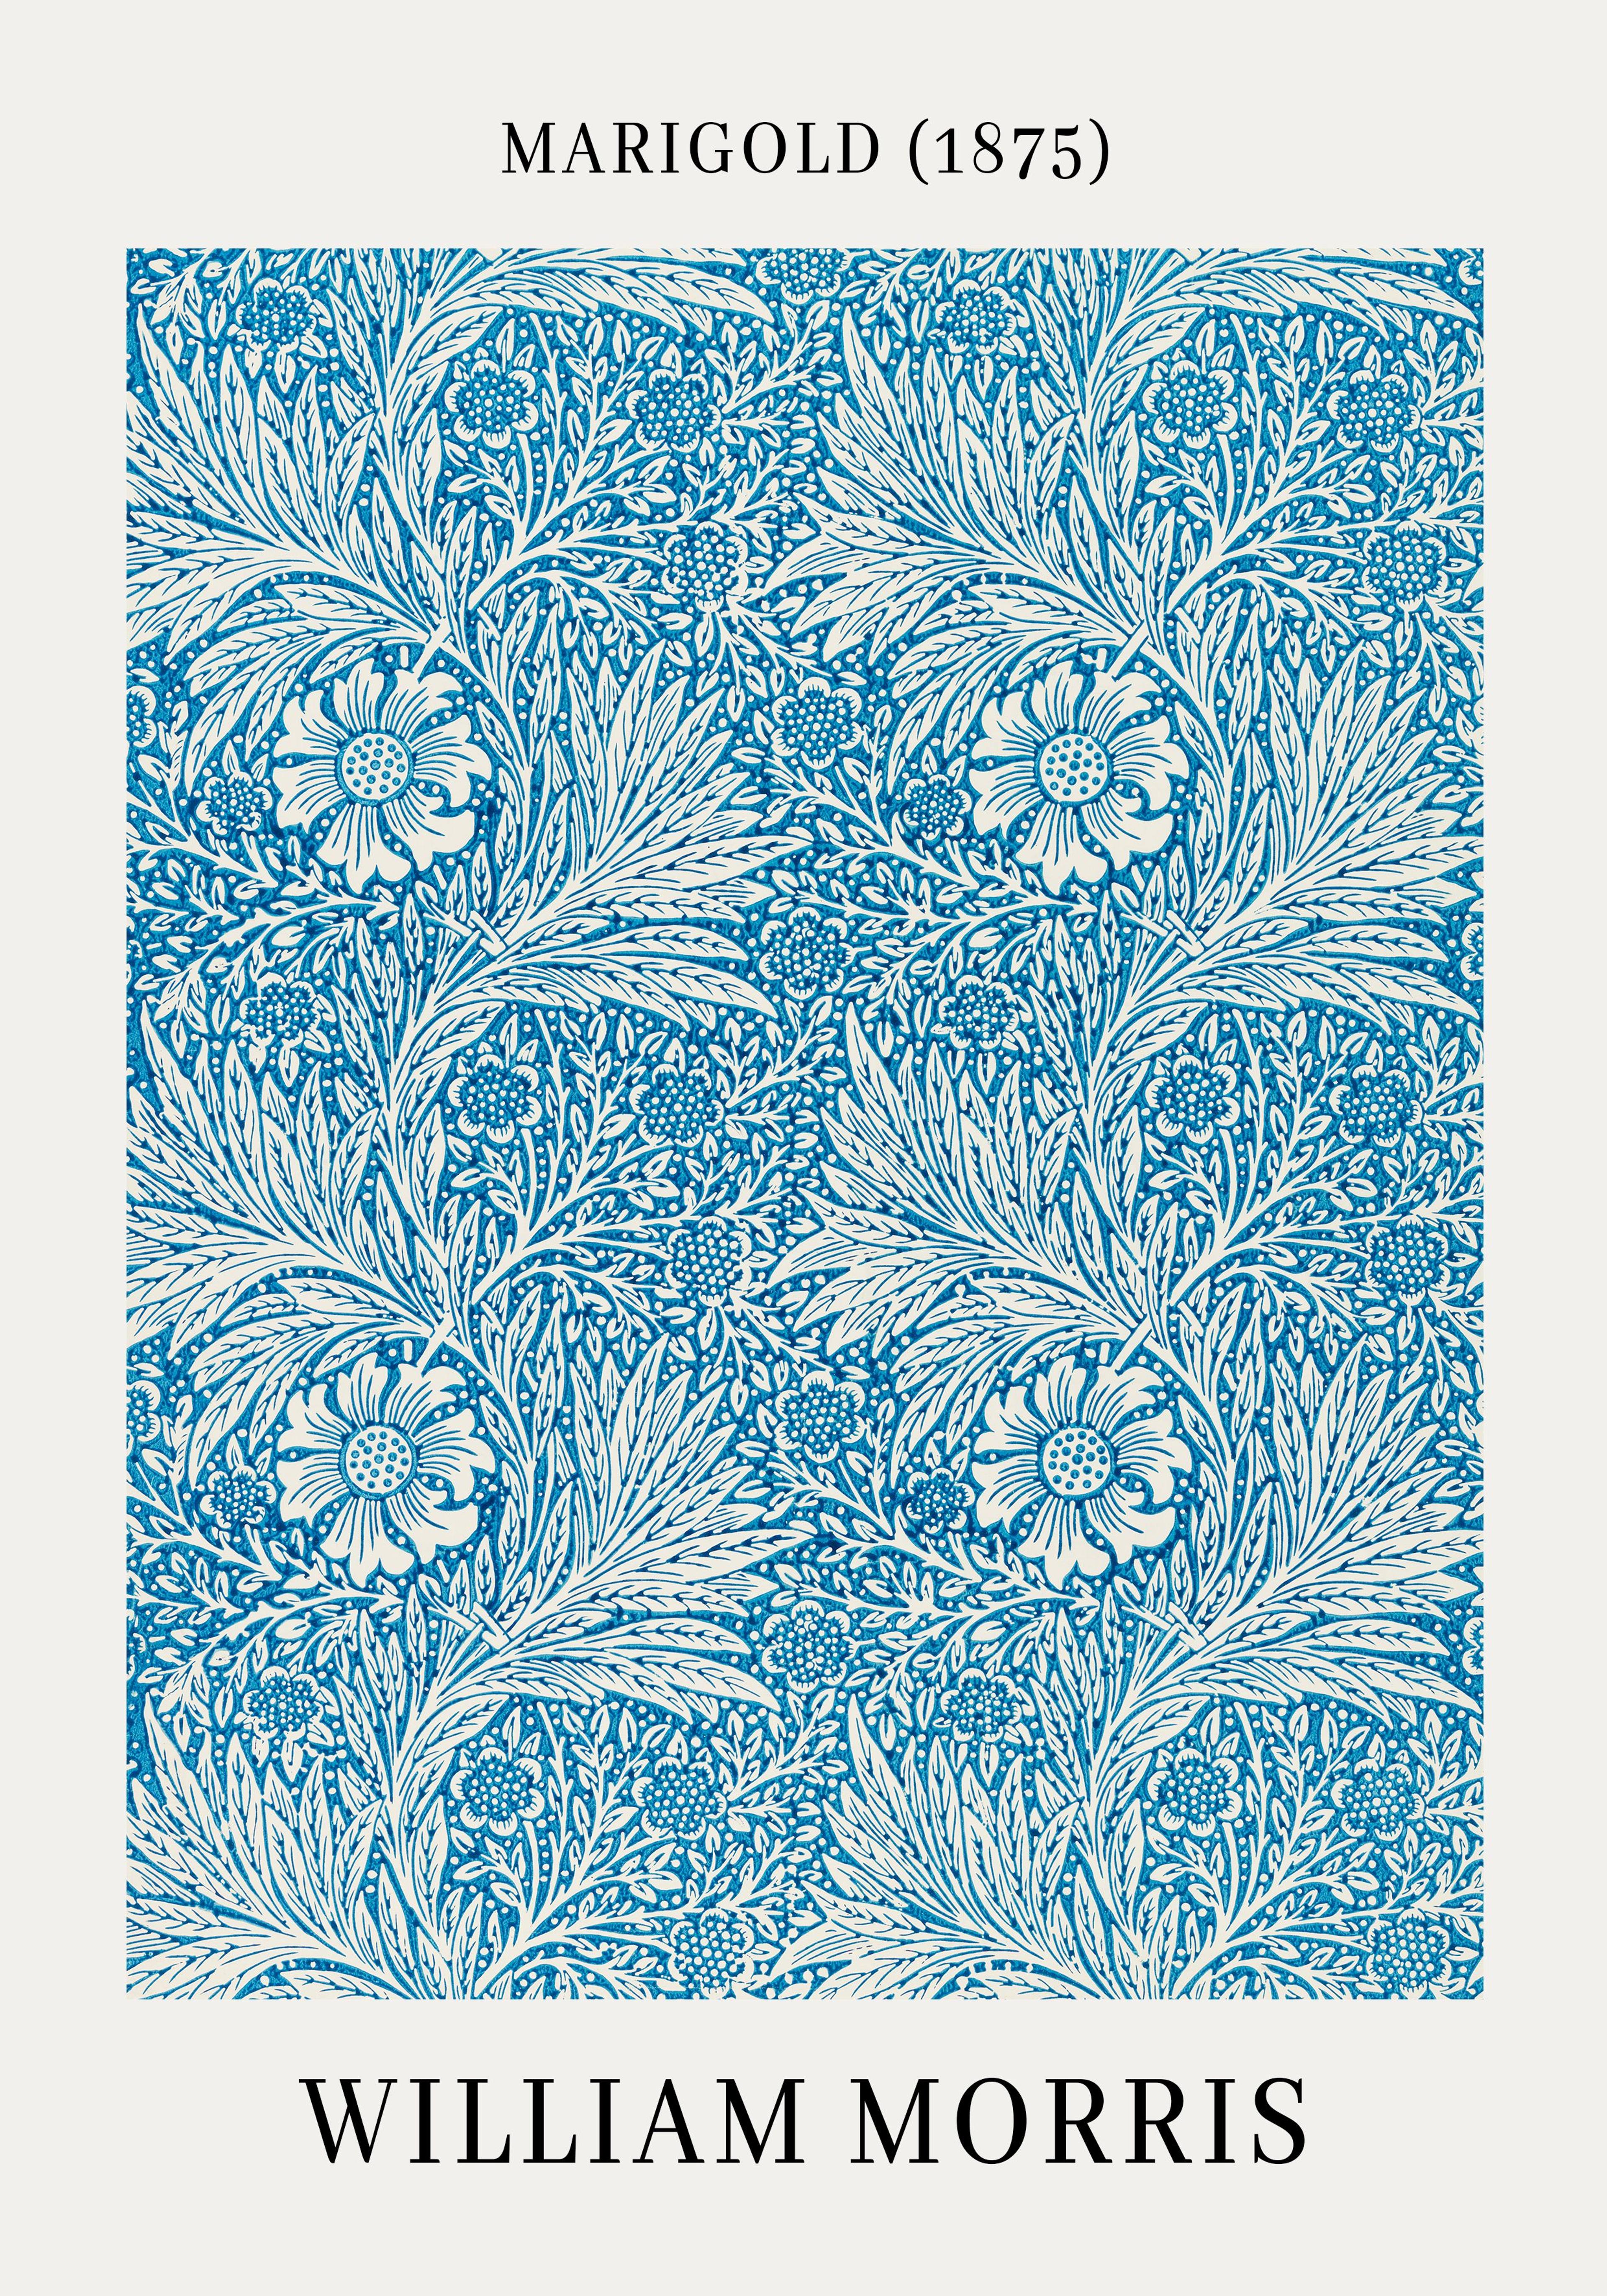 Plakat Marigold - plakat z patternem Williama Morrisa w niebieskich kolorach